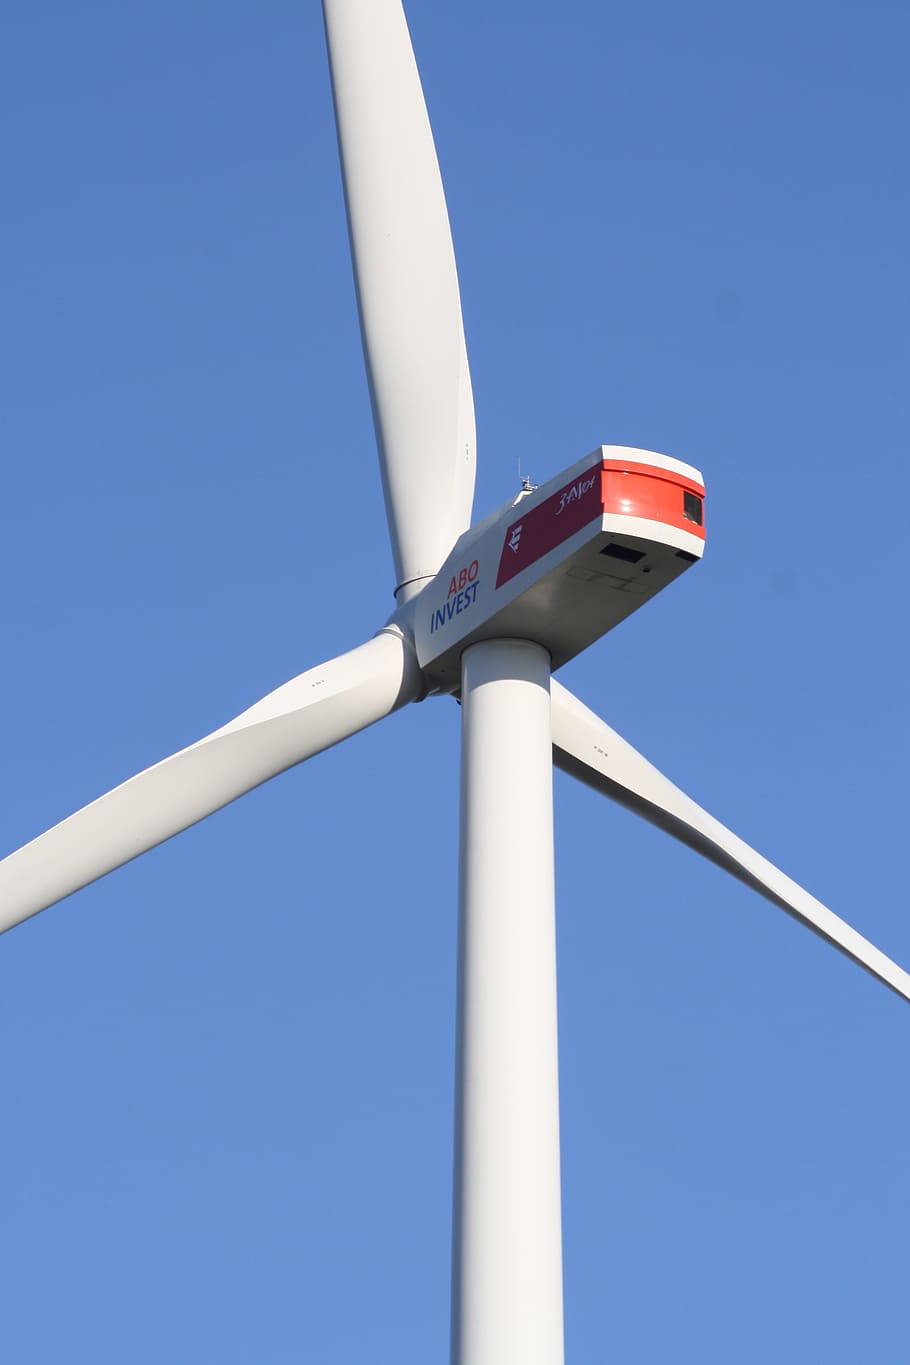 pinwheel, energy, wind power, sky, wind energy, renewable energy, wind turbine, rotor, energy revolution, alternative energy